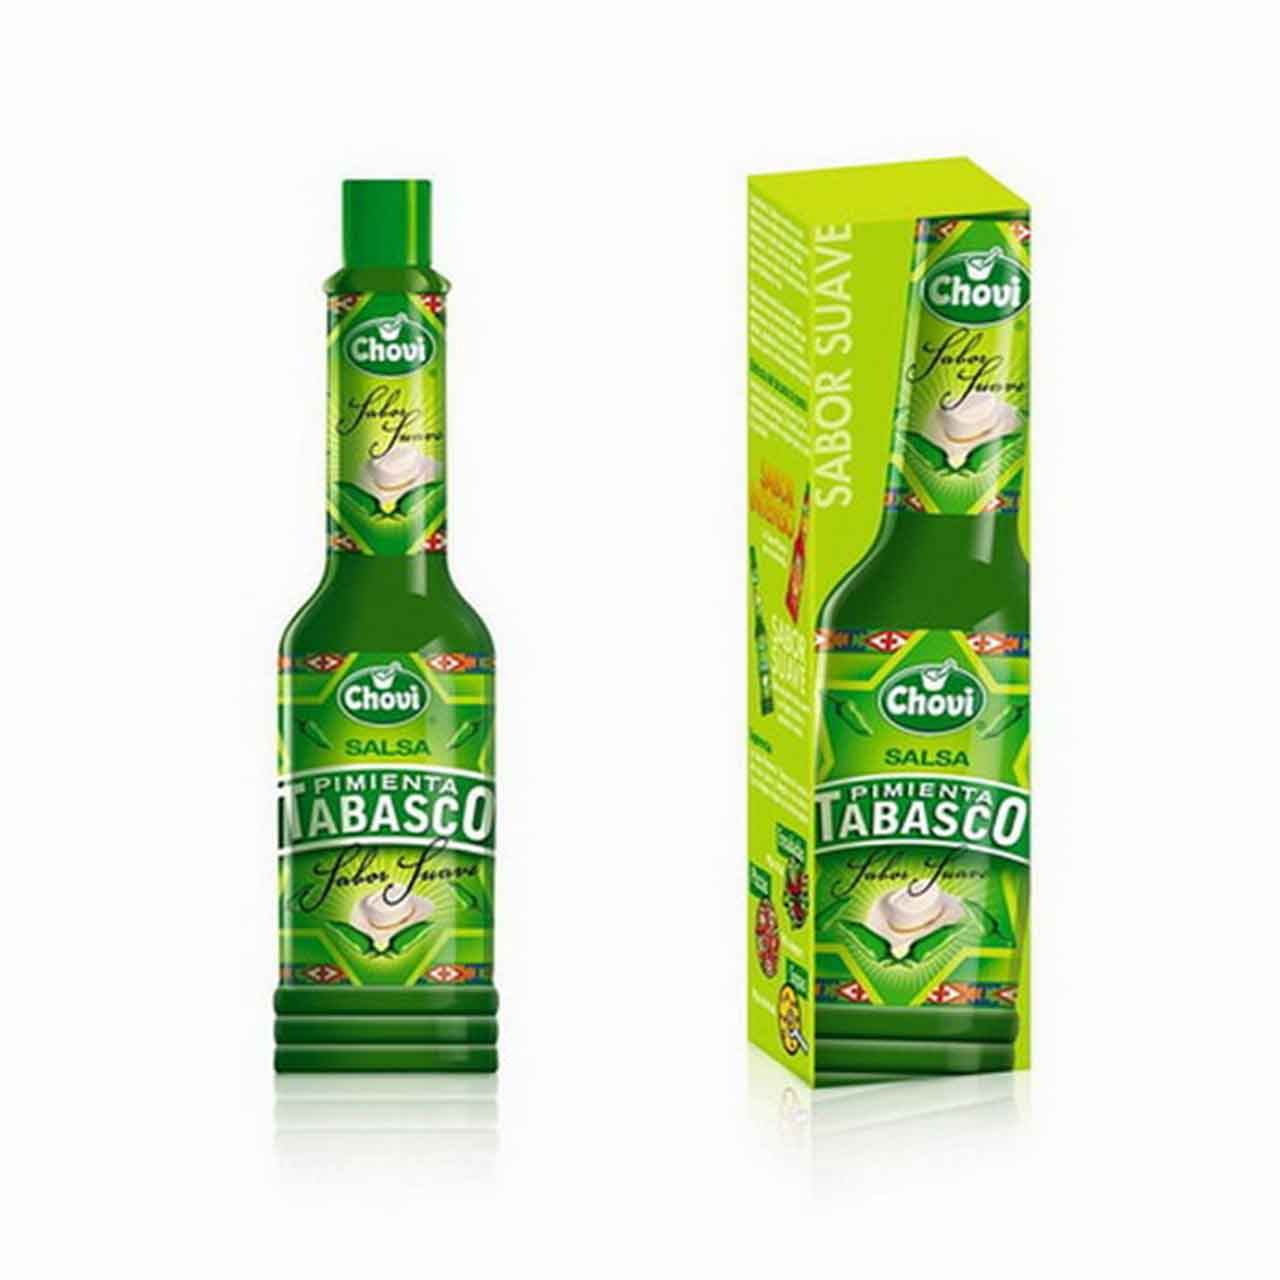 سس سالسا تاباسکو سبز